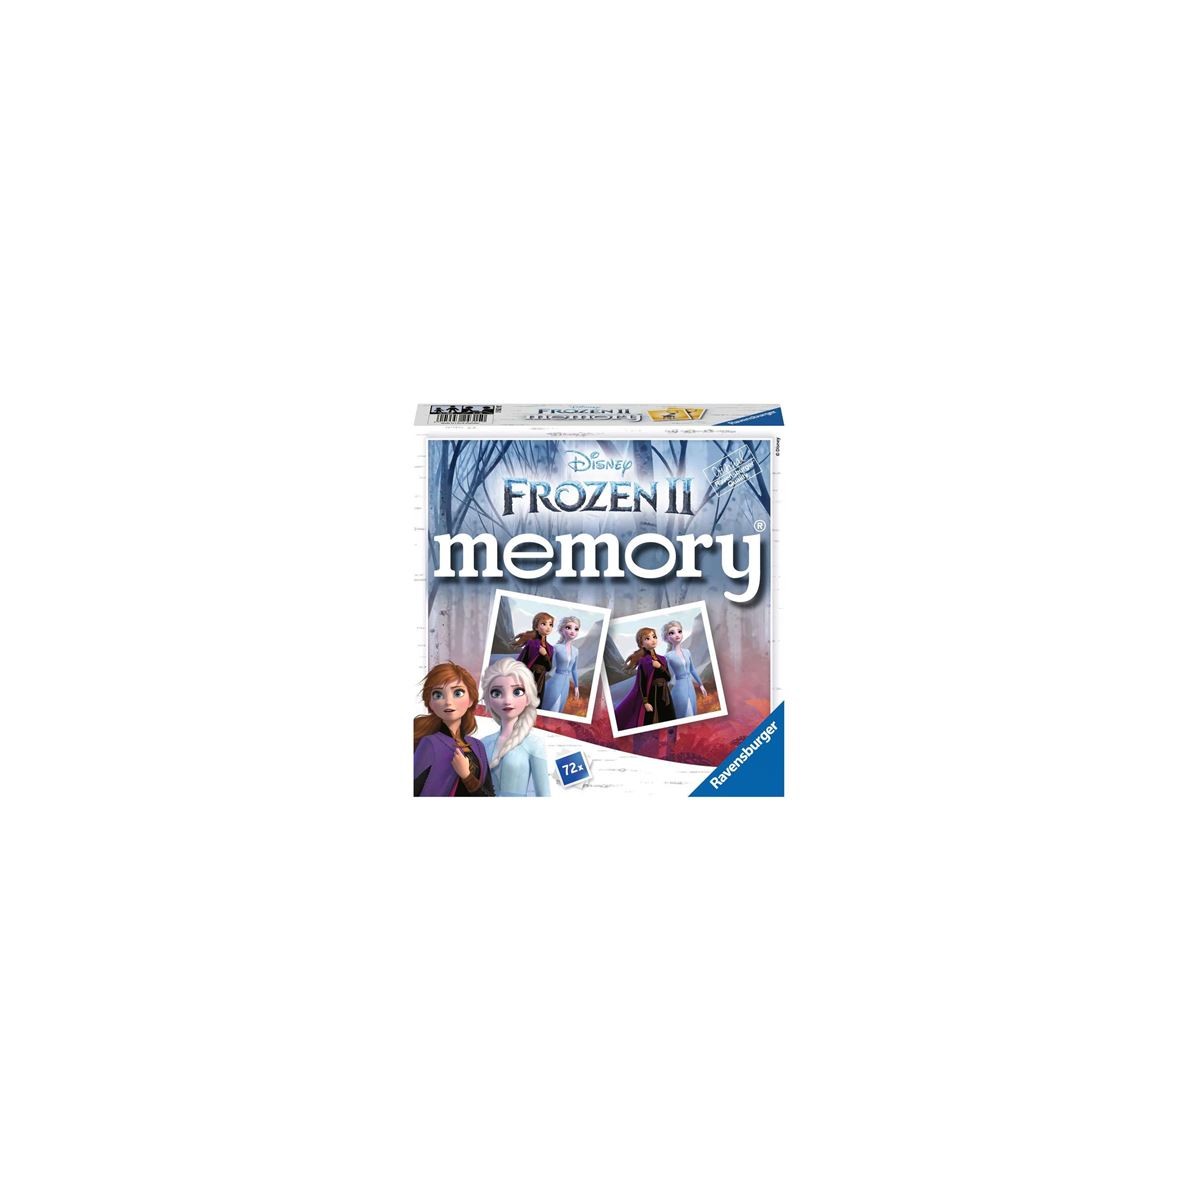 Ravensburger Spiel - Memory - Frozen 2 memory